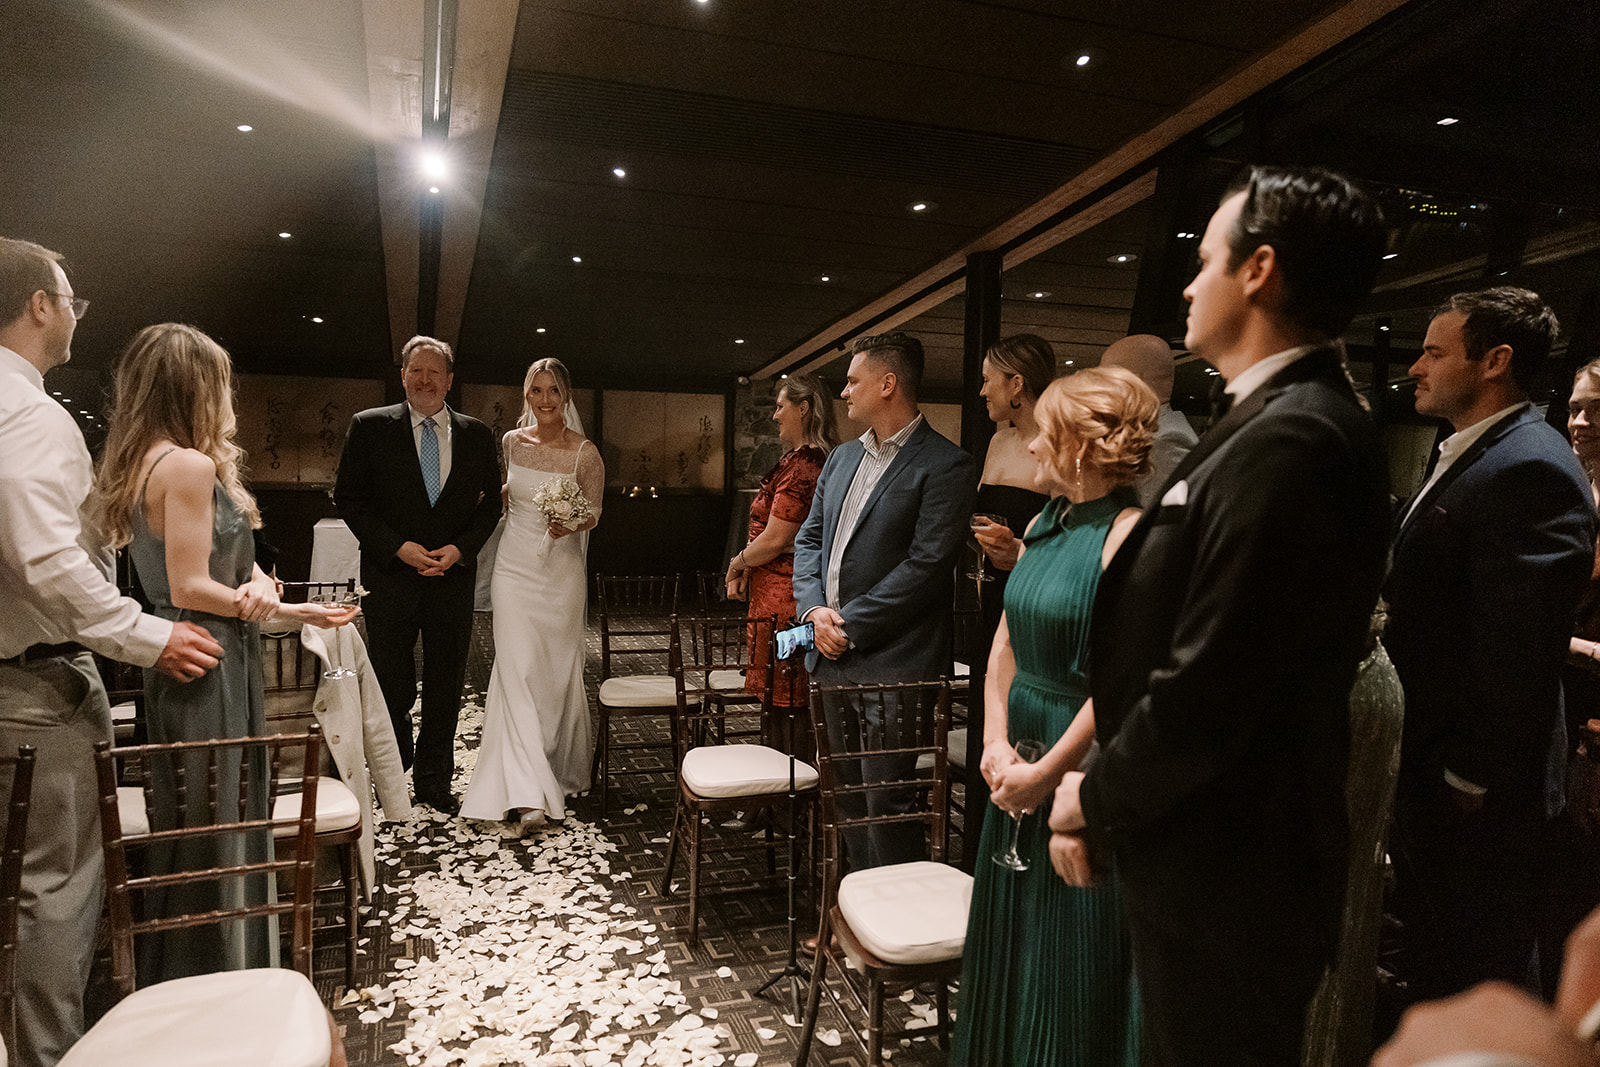 bride walks down aisle of white rose petals during Canlis wedding